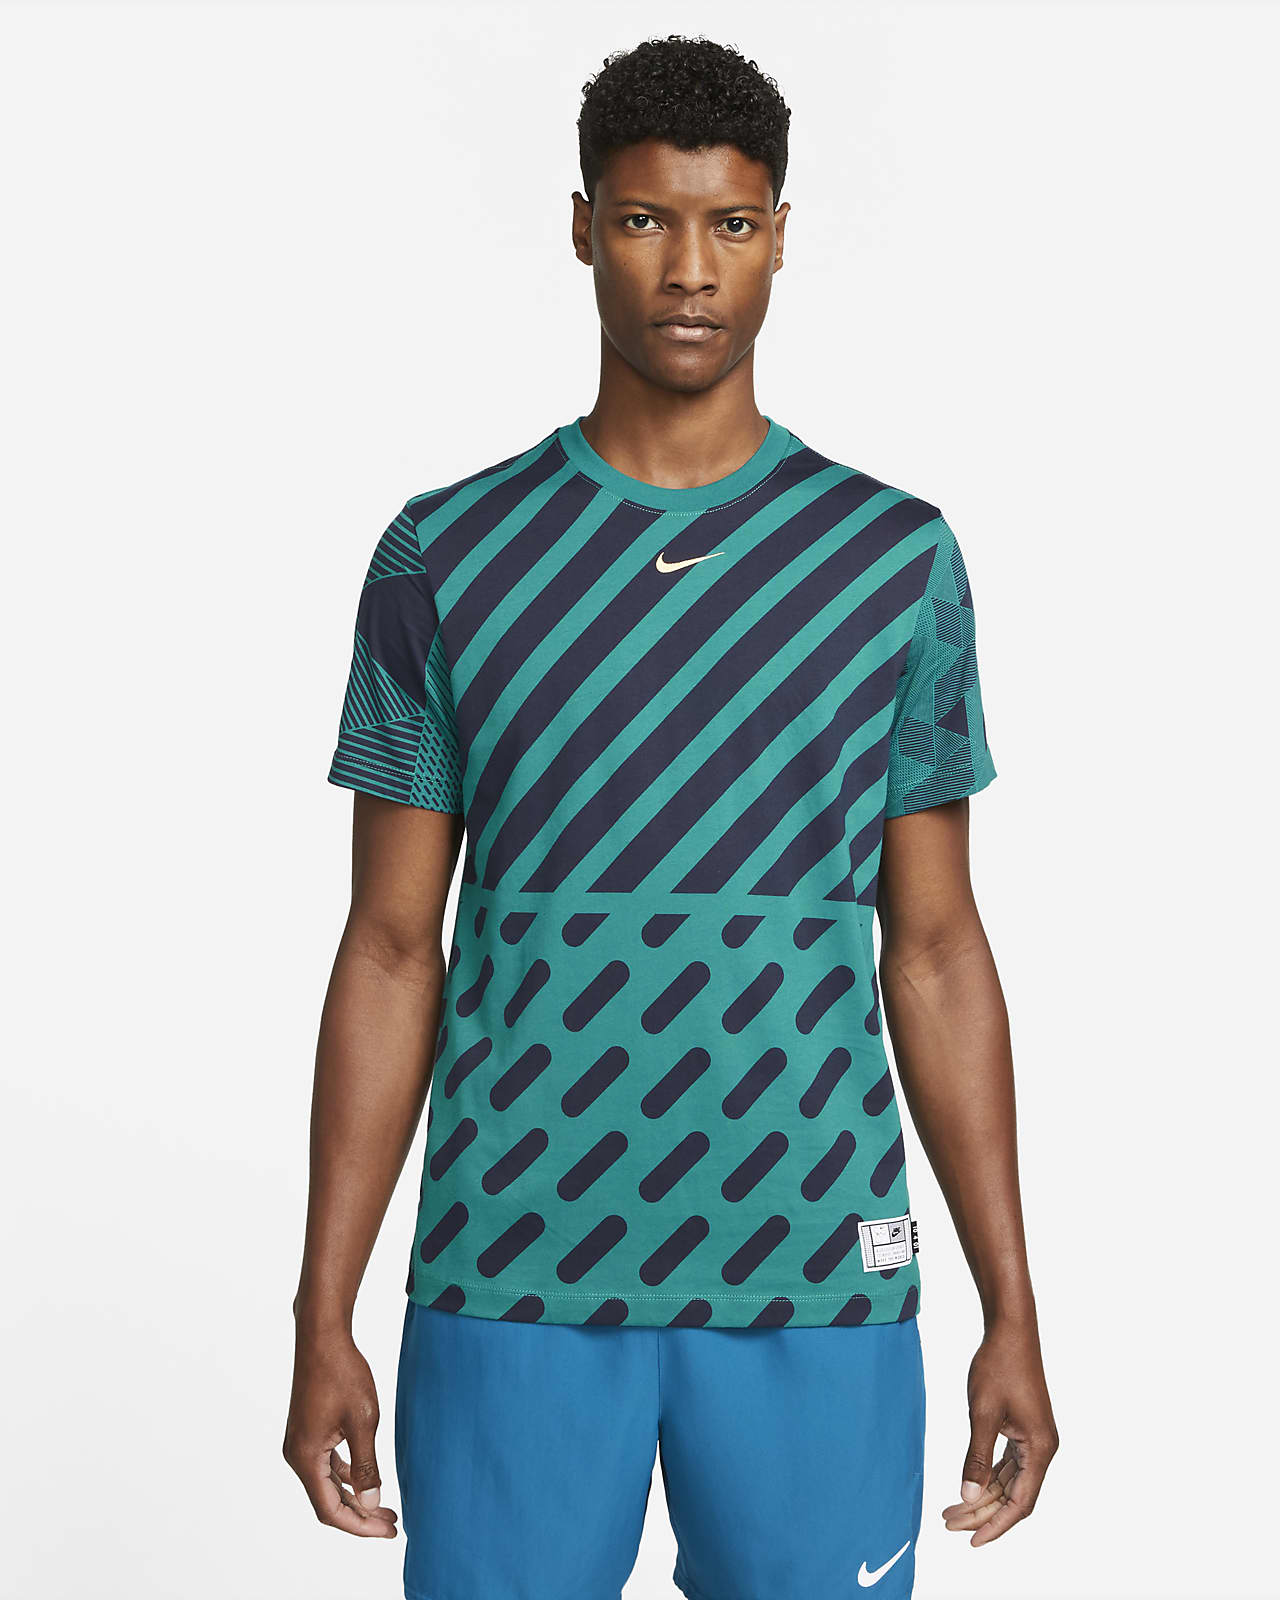 Serena Williams Design Graphic Tennis T-Shirt. Nike AU